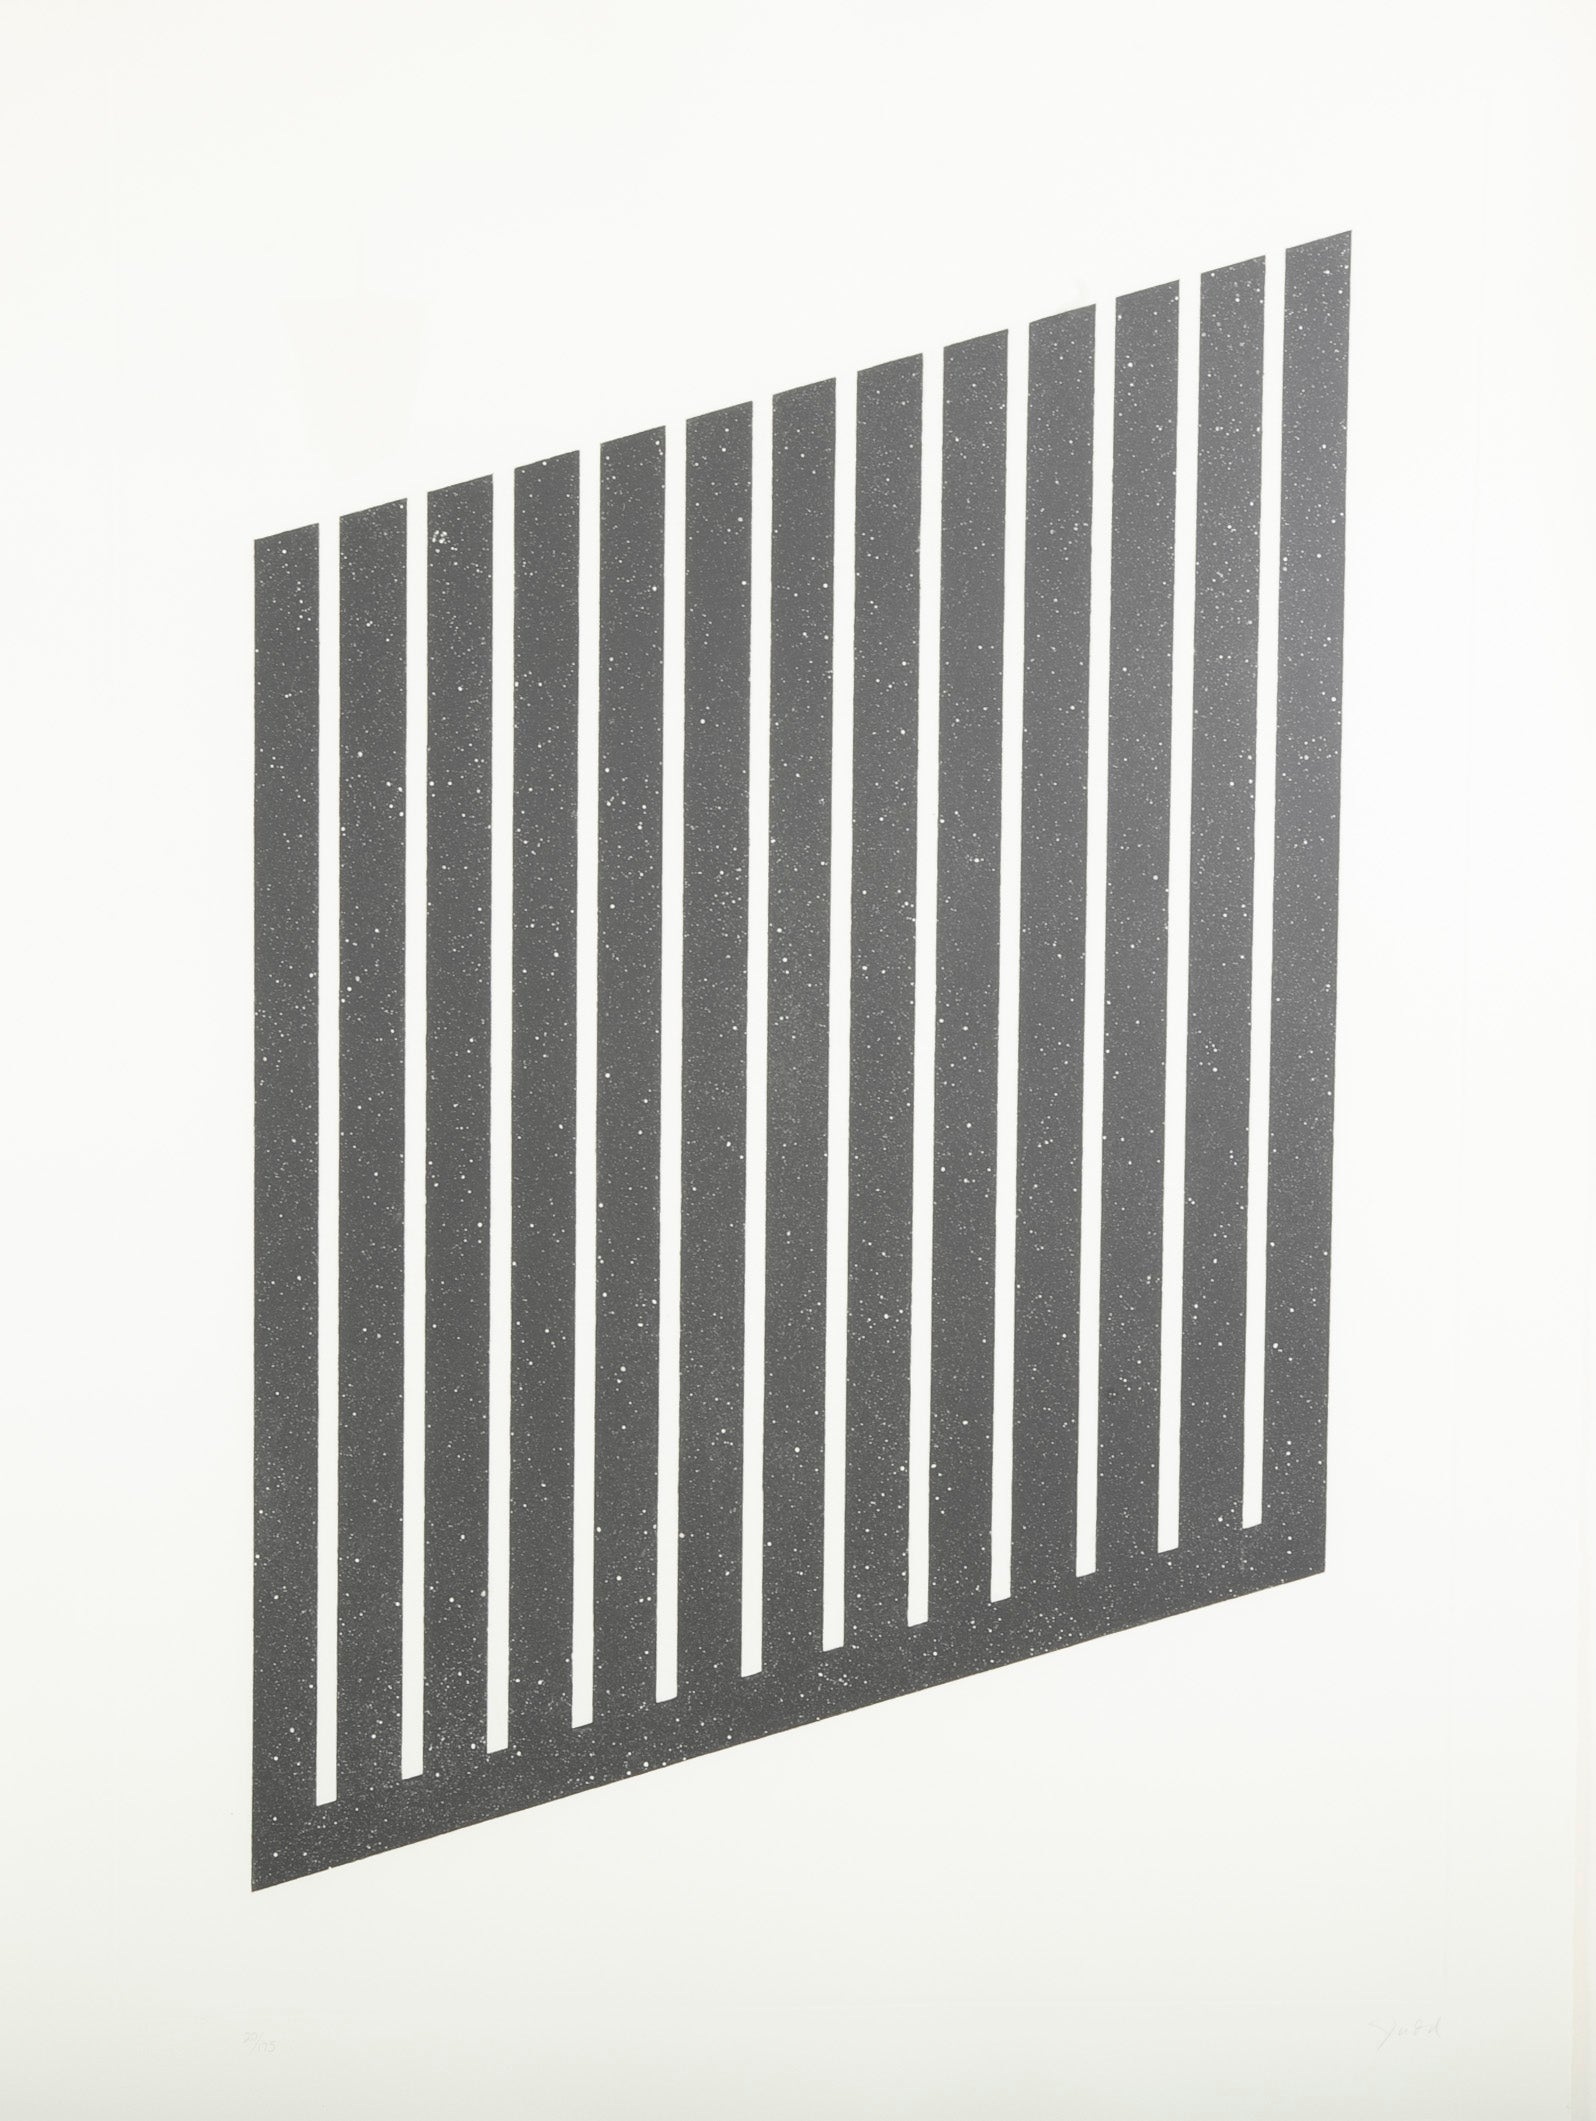 Donald Judd, Untitled, 1978-1979